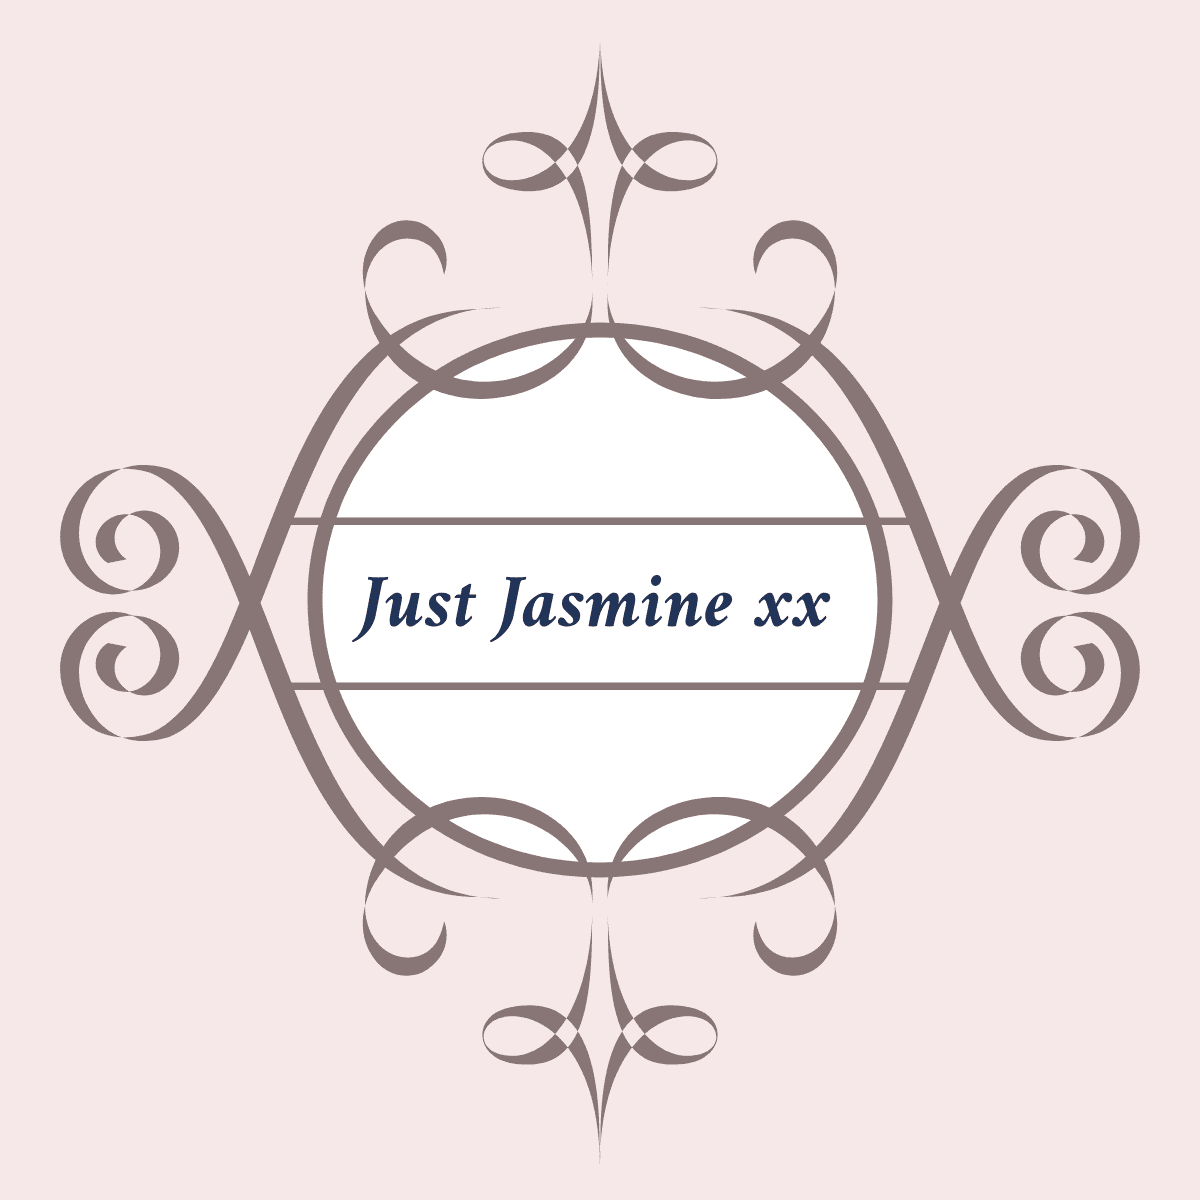 Just Jasmine xx